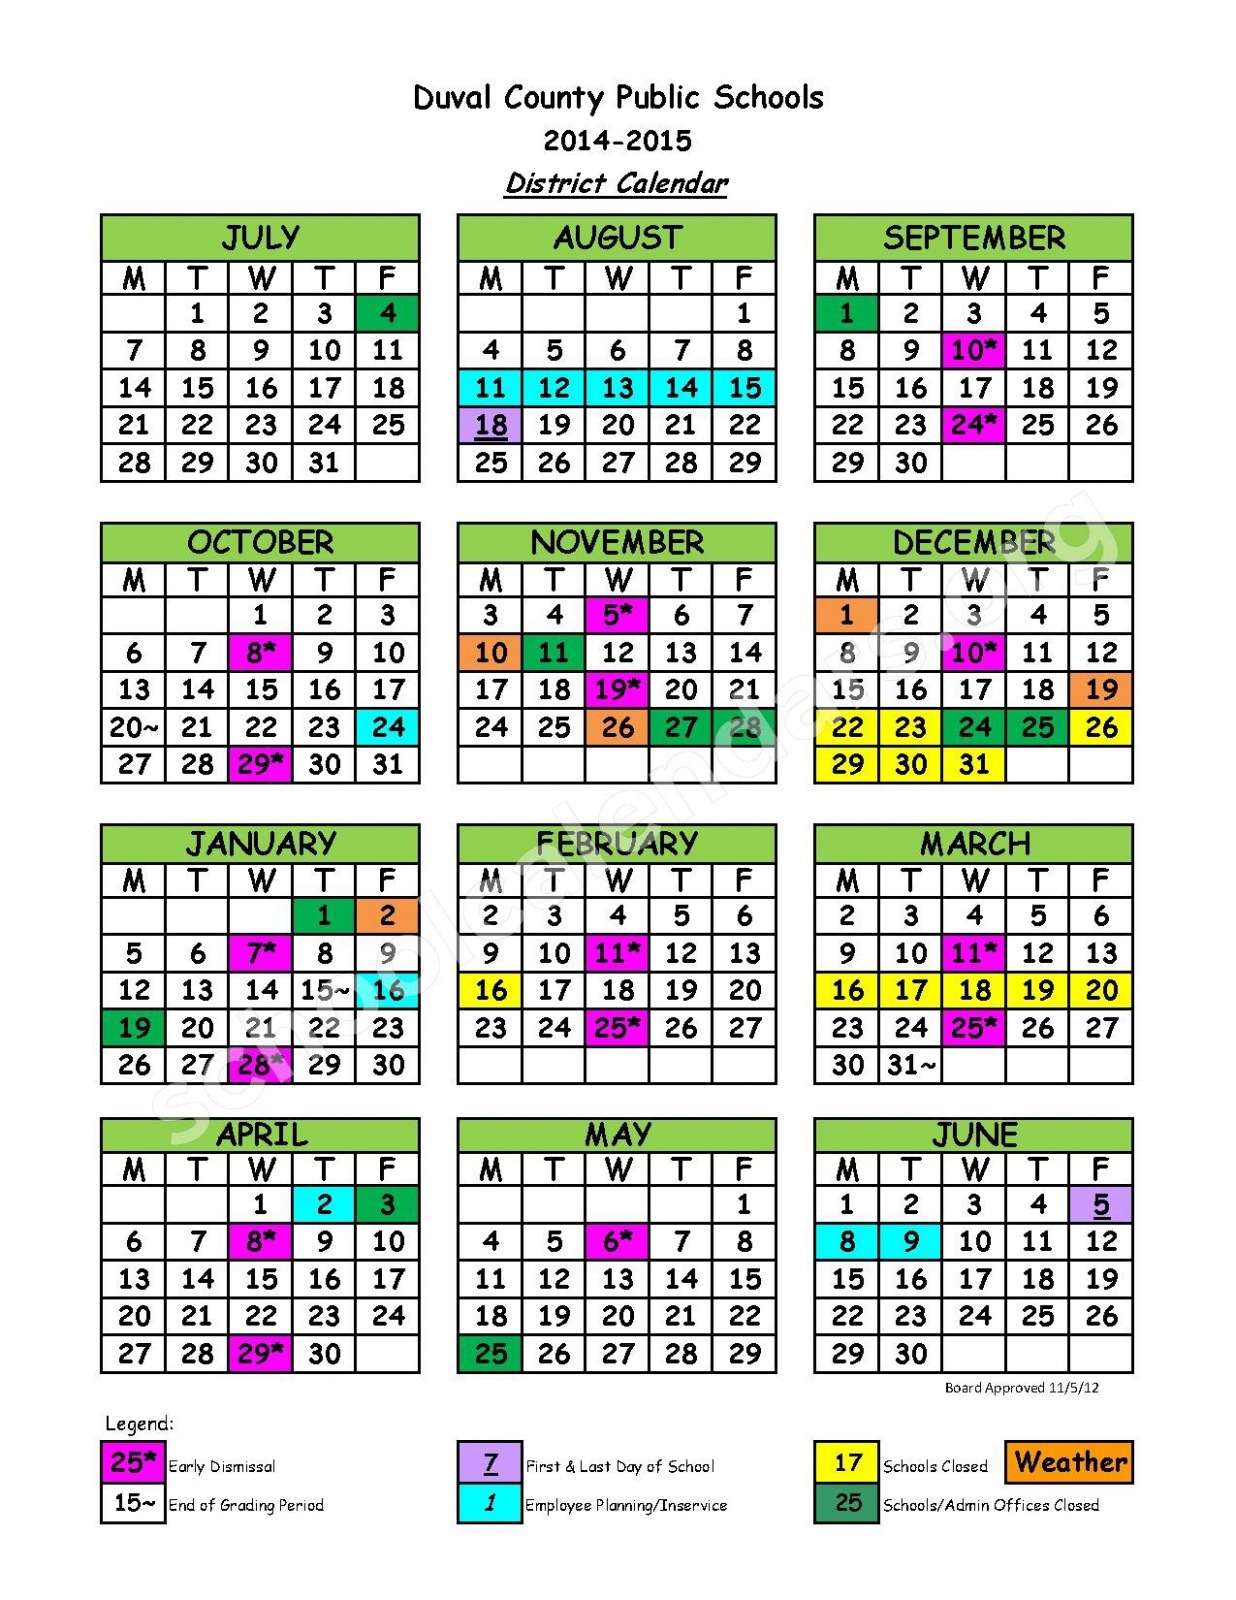 duval-schools-calendar-qualads